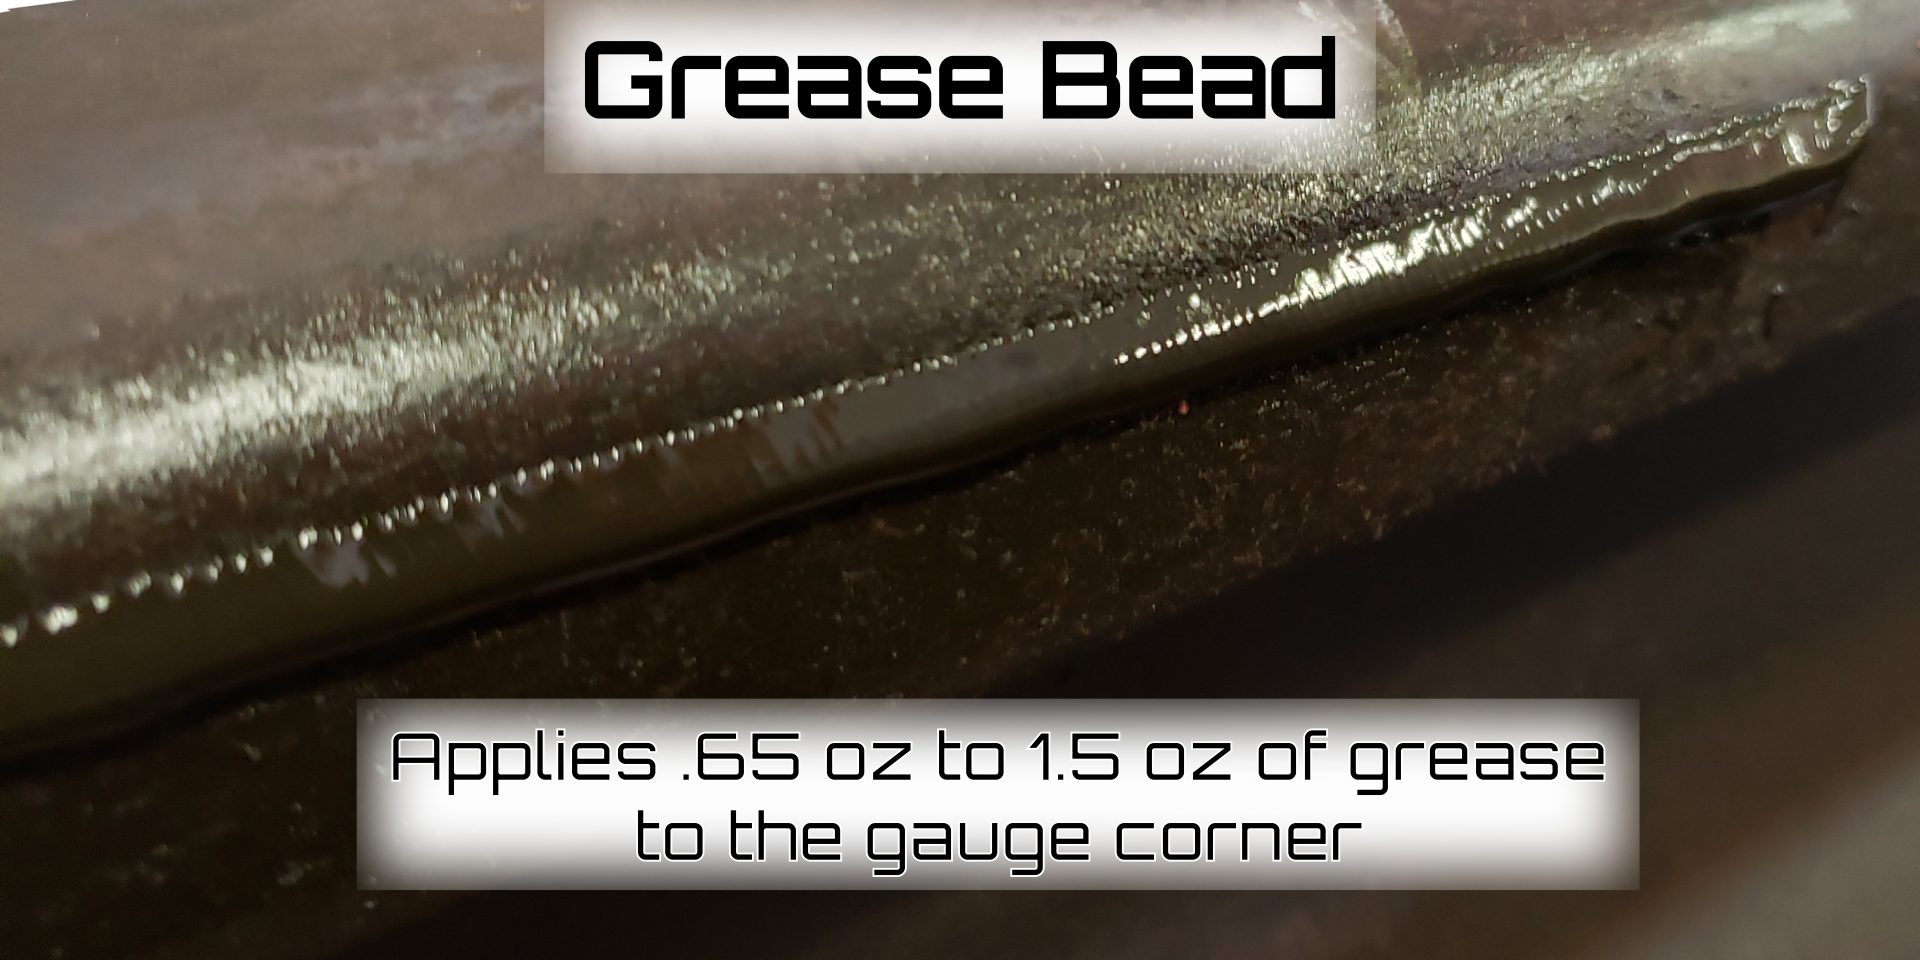 Grease Bead